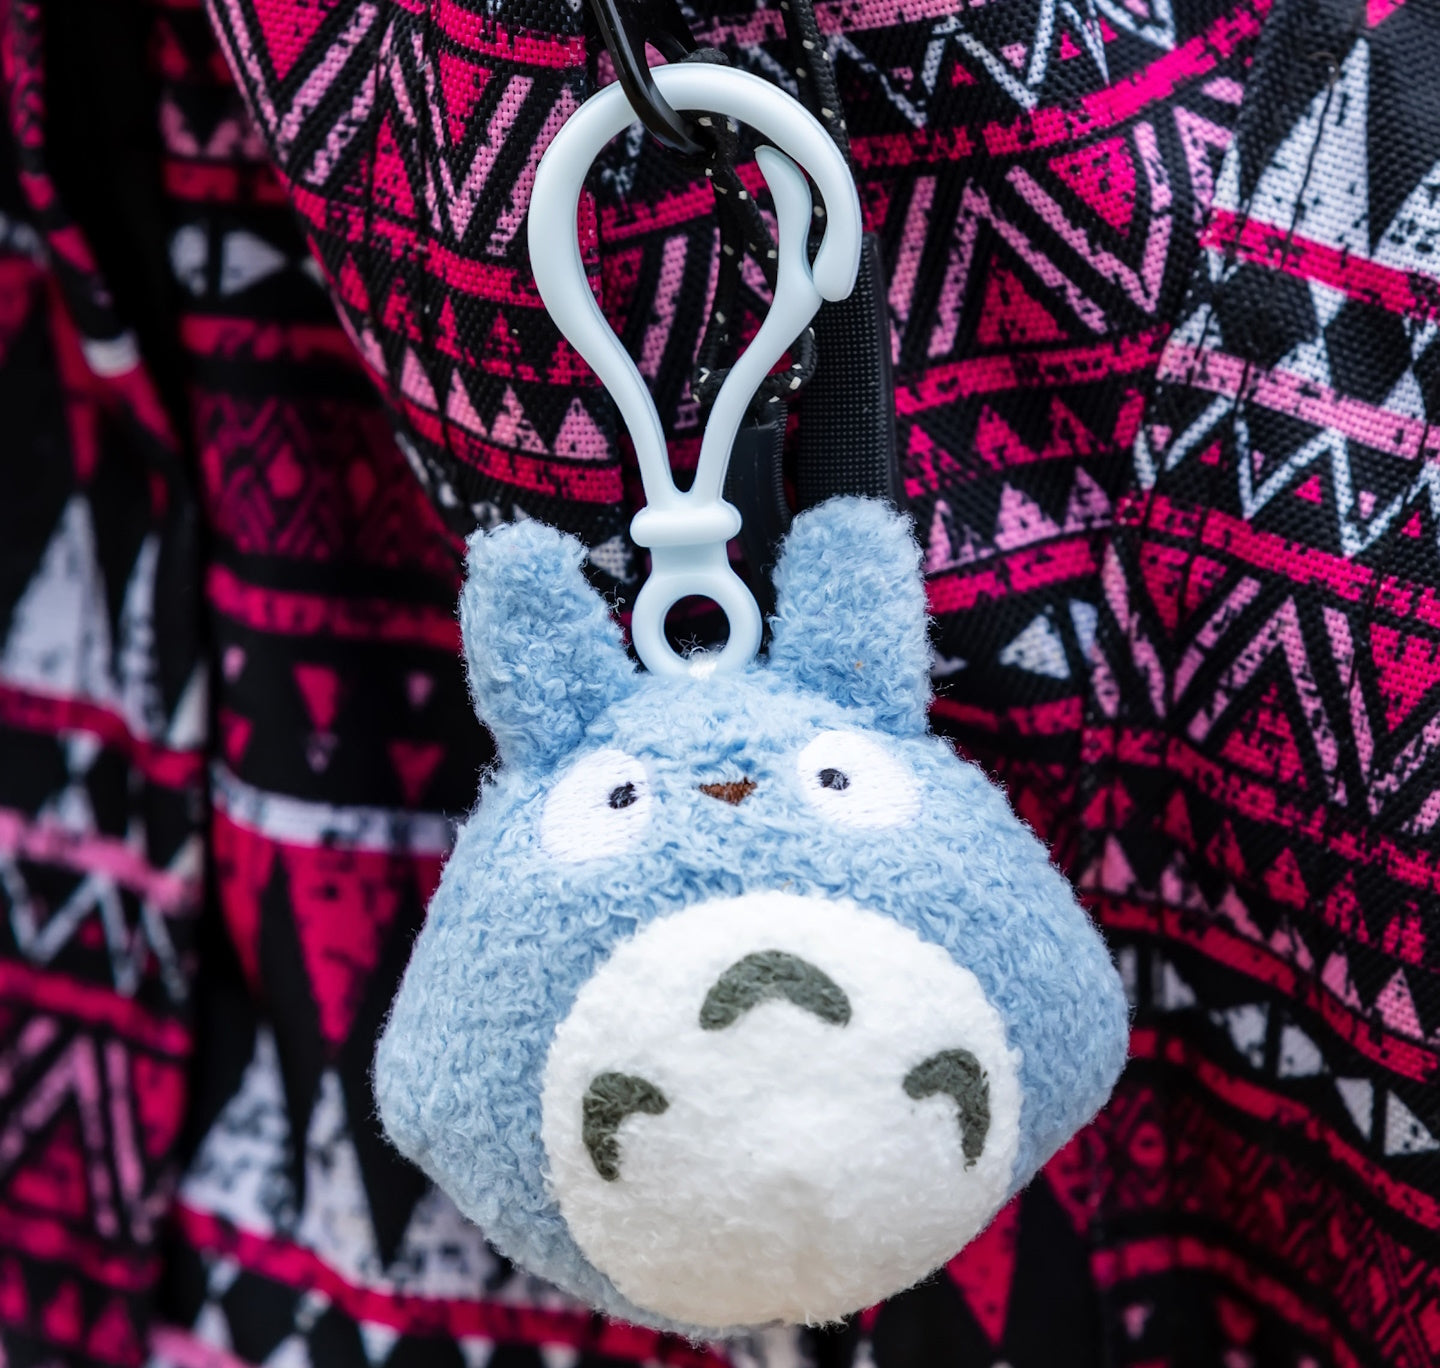 Blue Totoro Plush Backpack Clip - My Neighbor Totoro